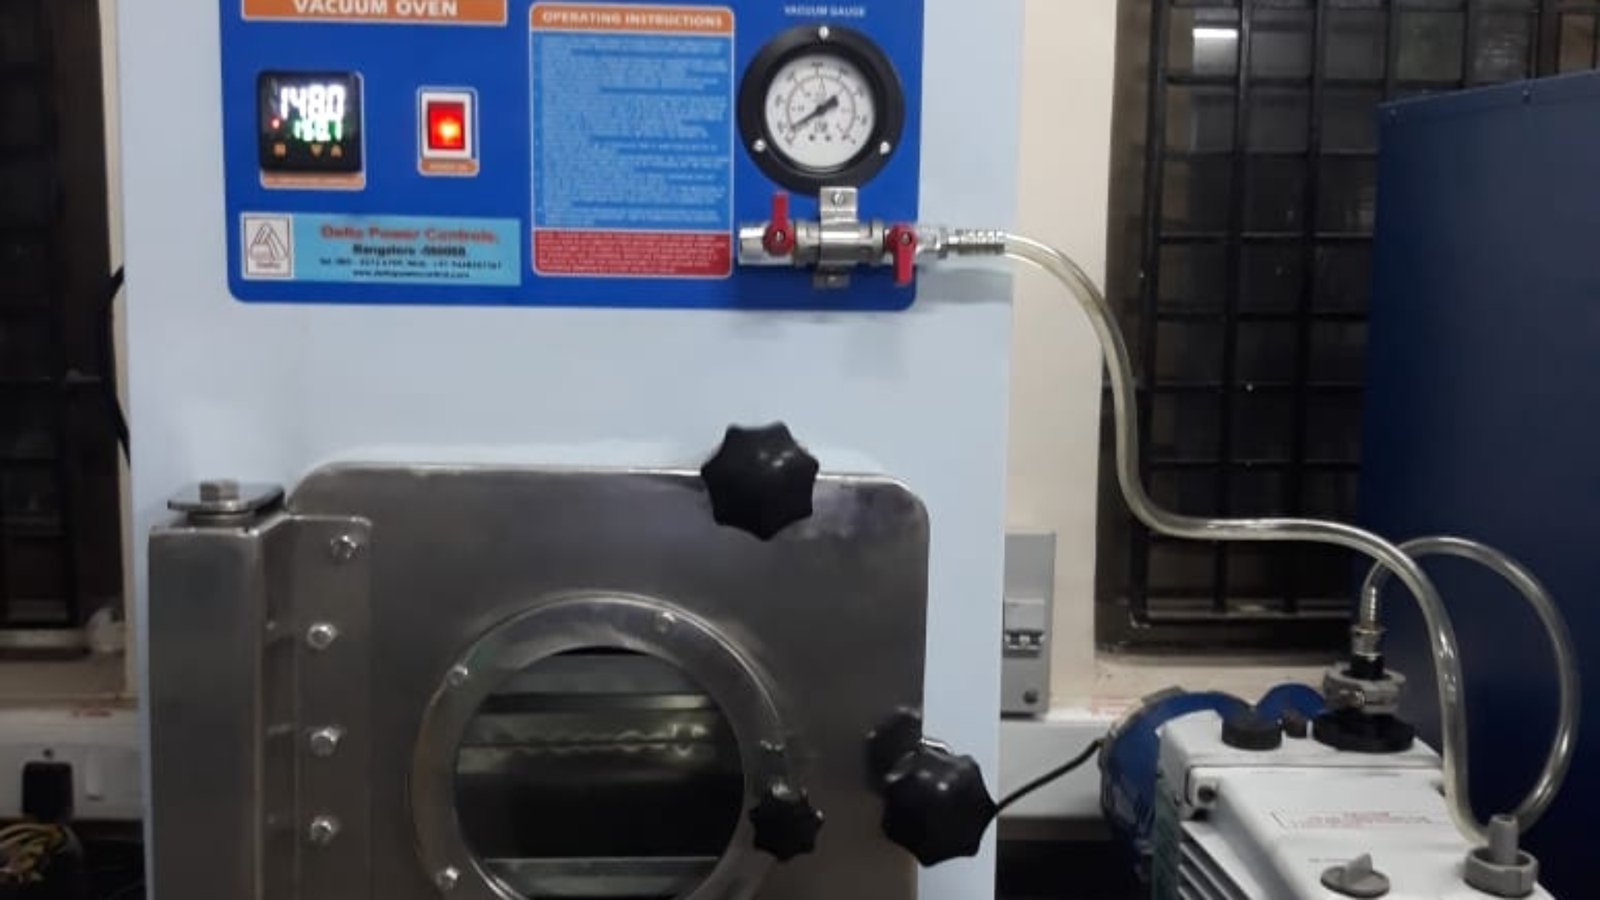 Vacuum oven - Operating temp - 300 Deg C